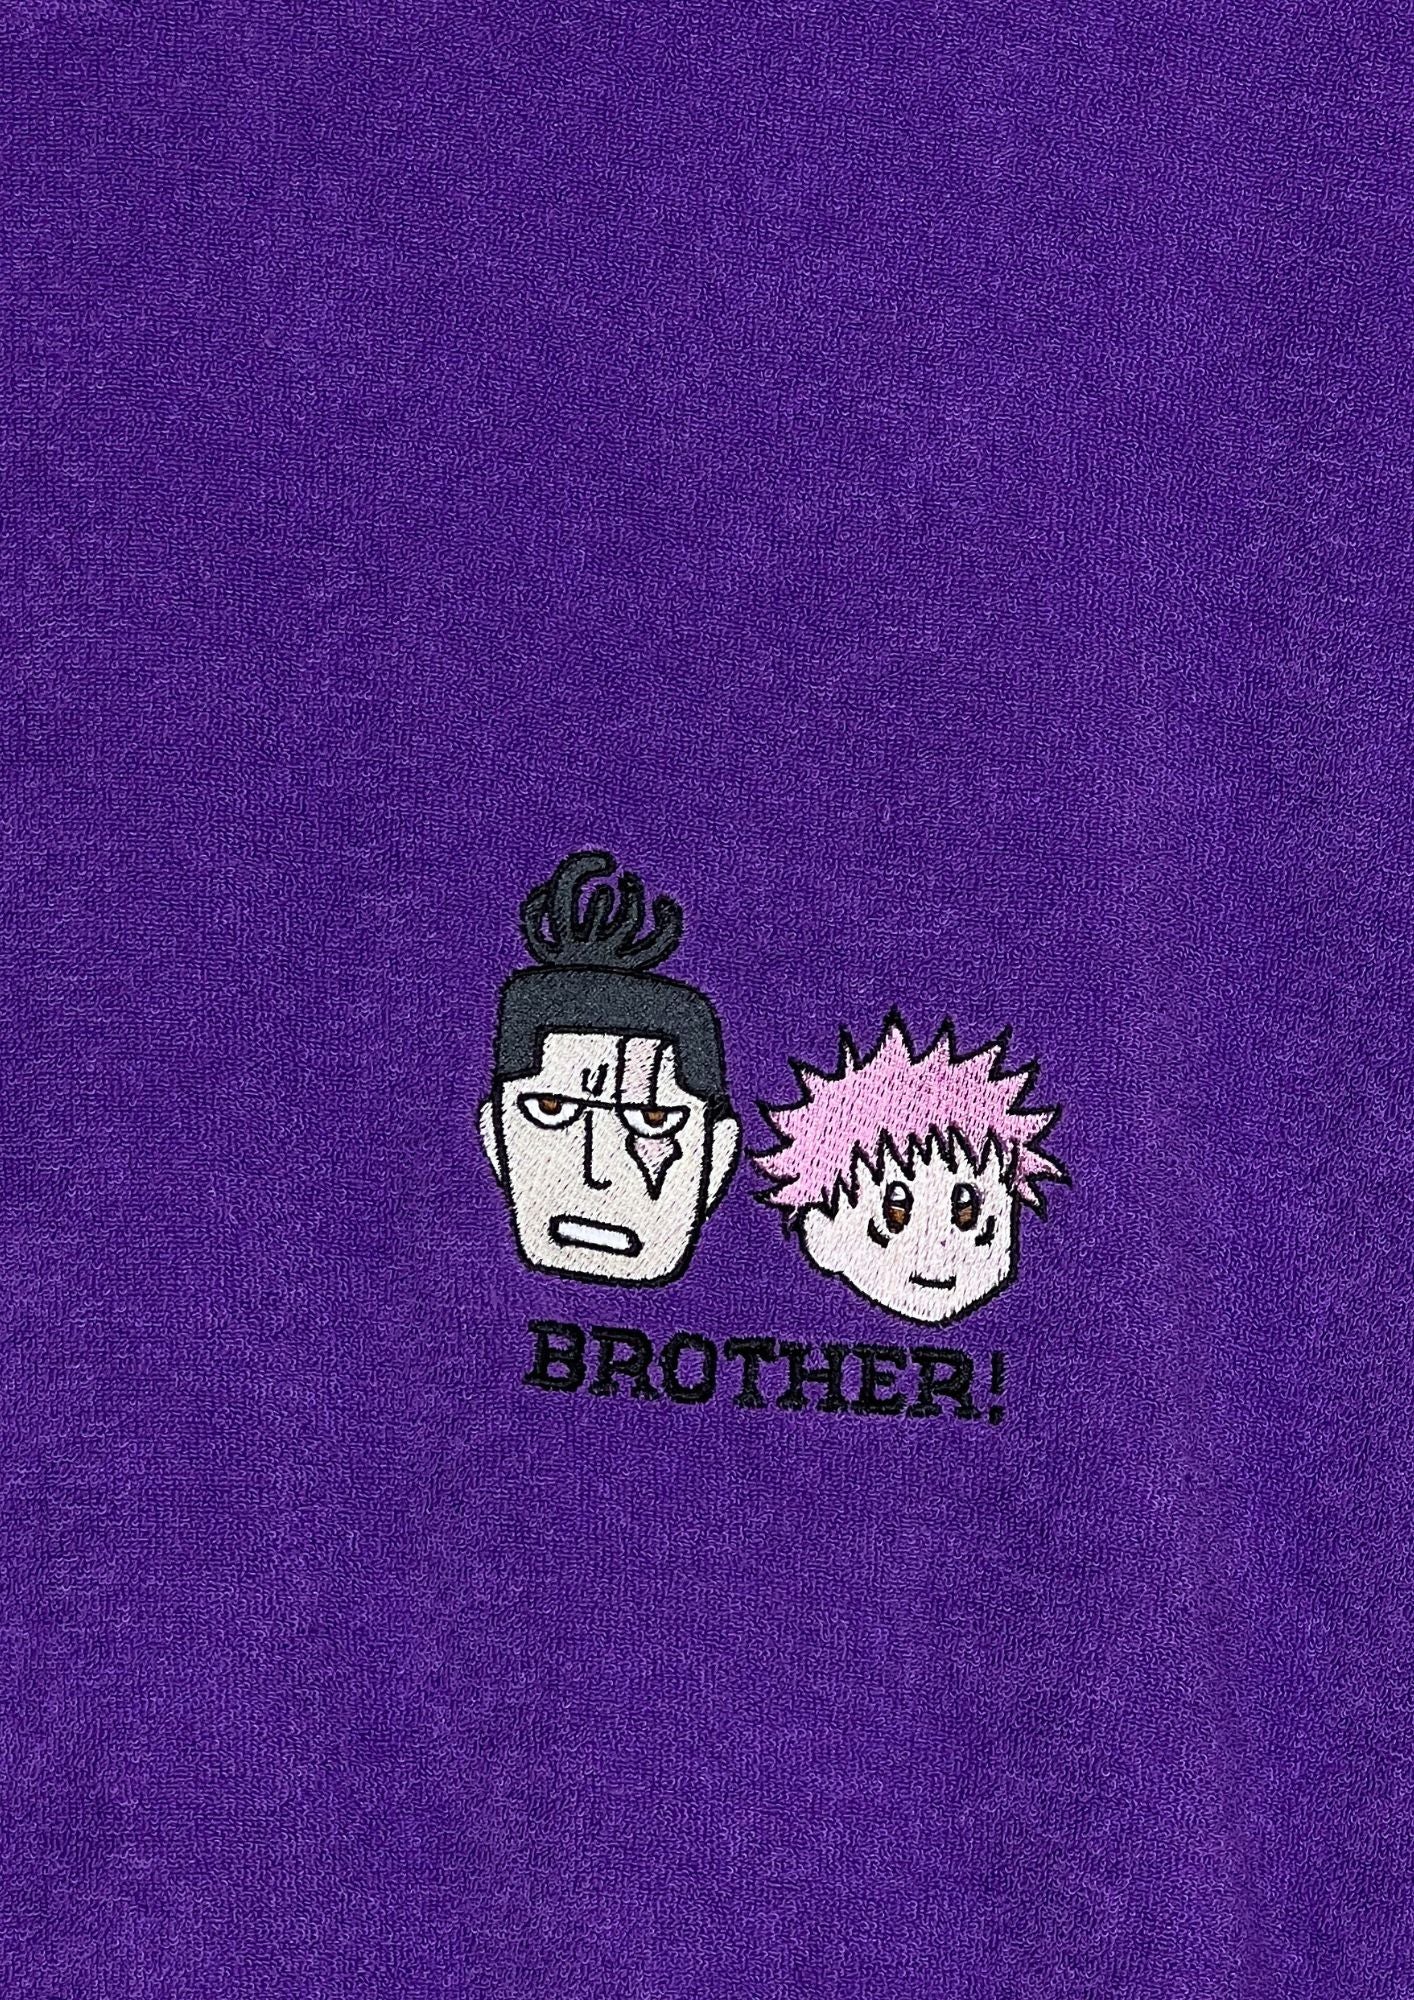 2022 Jujutsu Kaisen x GU Brother Embroidered Loungewear